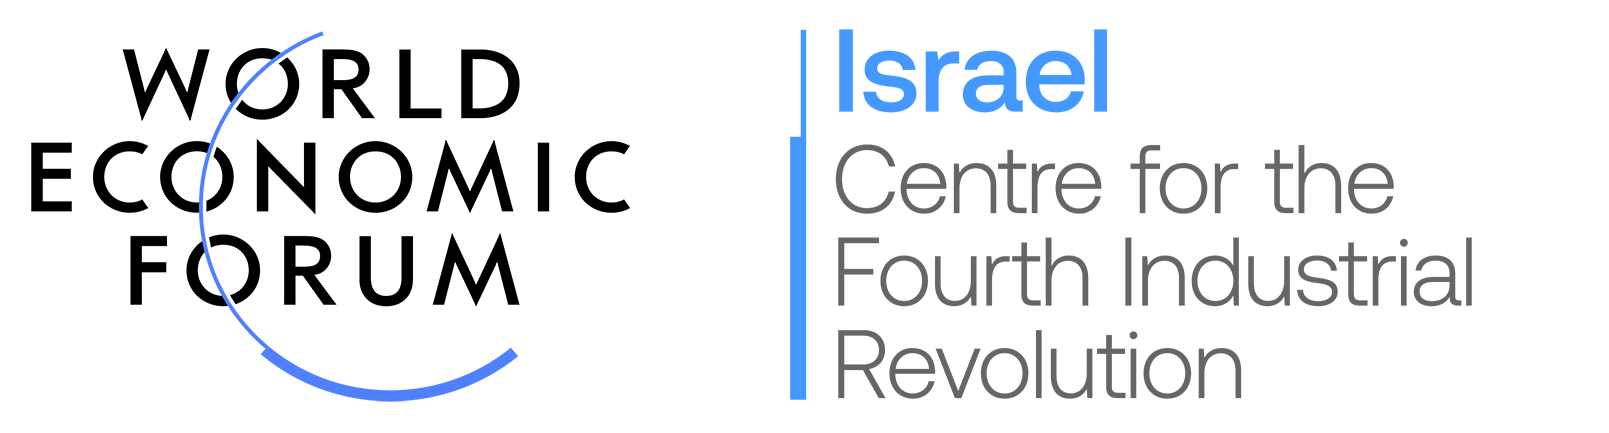 WEF-C4IR Israel logo combined